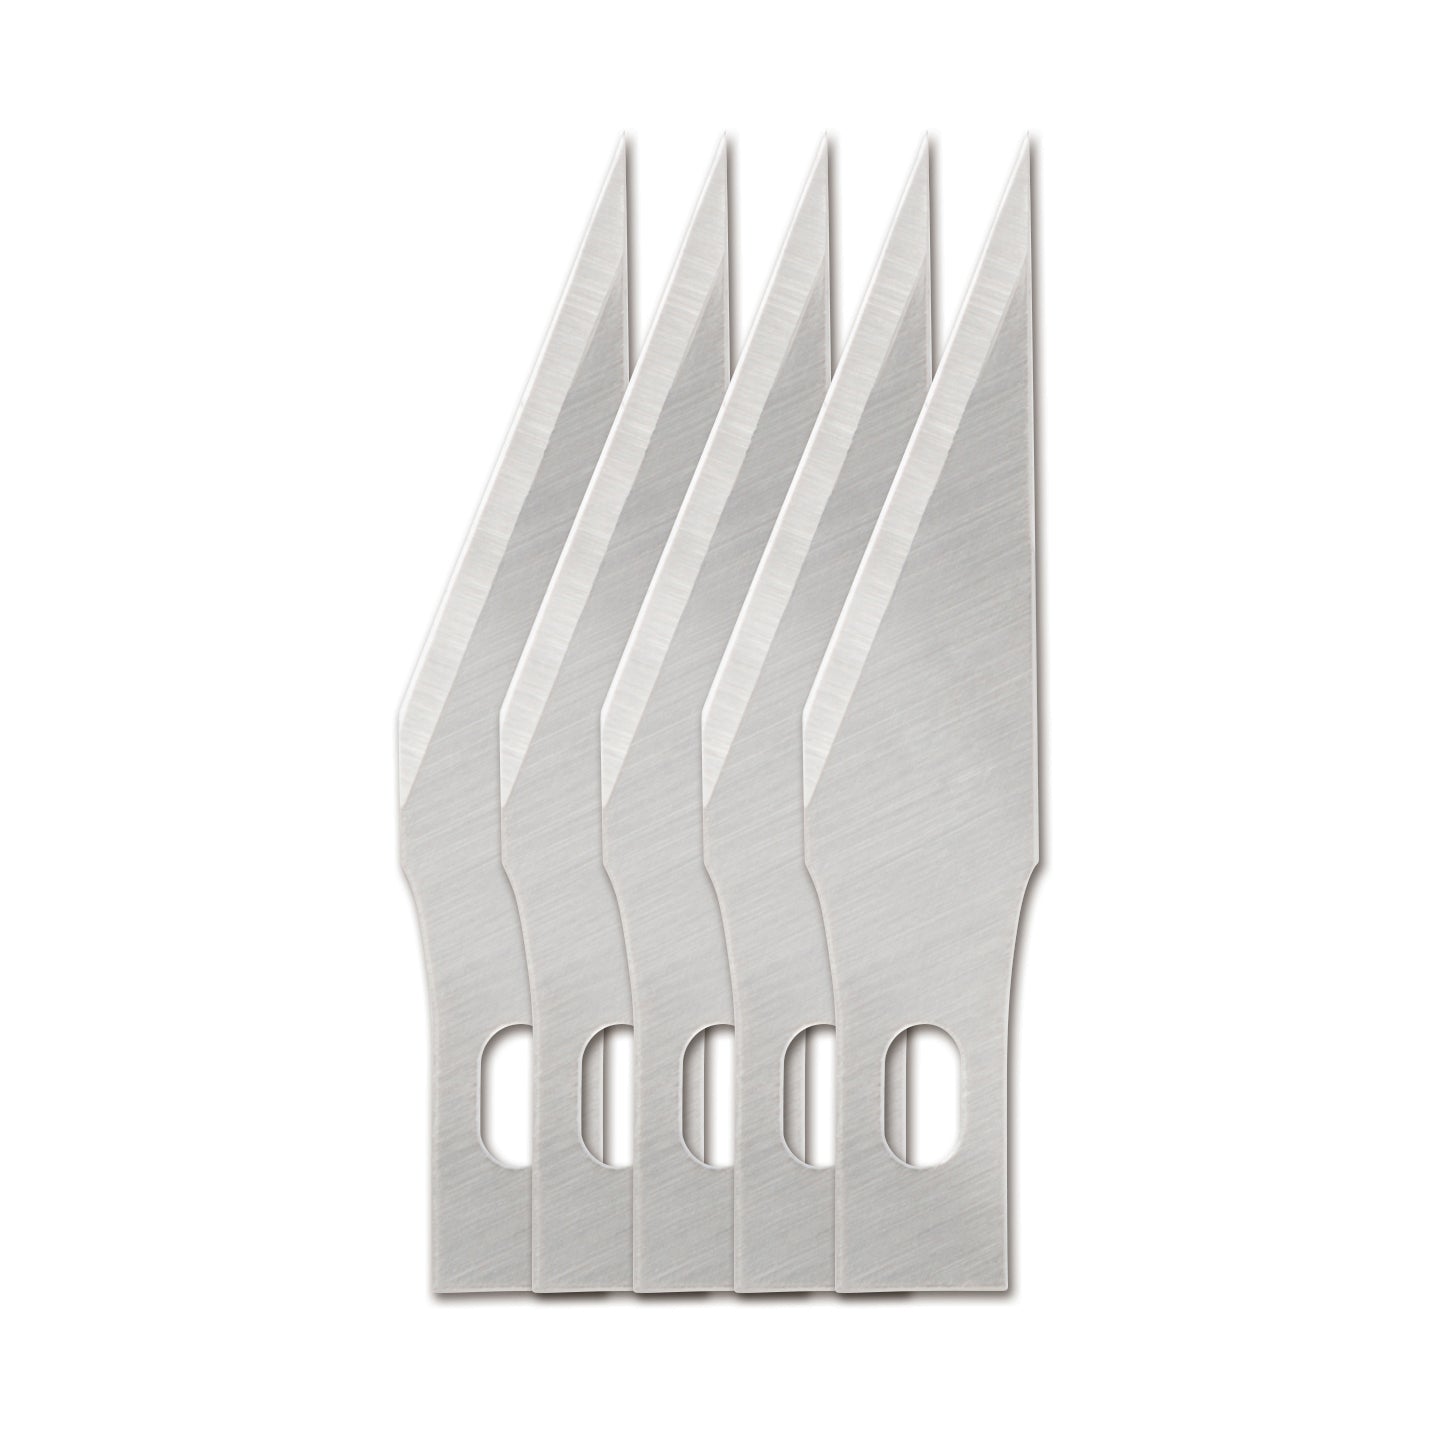 Fiskars Precision Art Knife Blades: No.11 - 5pk